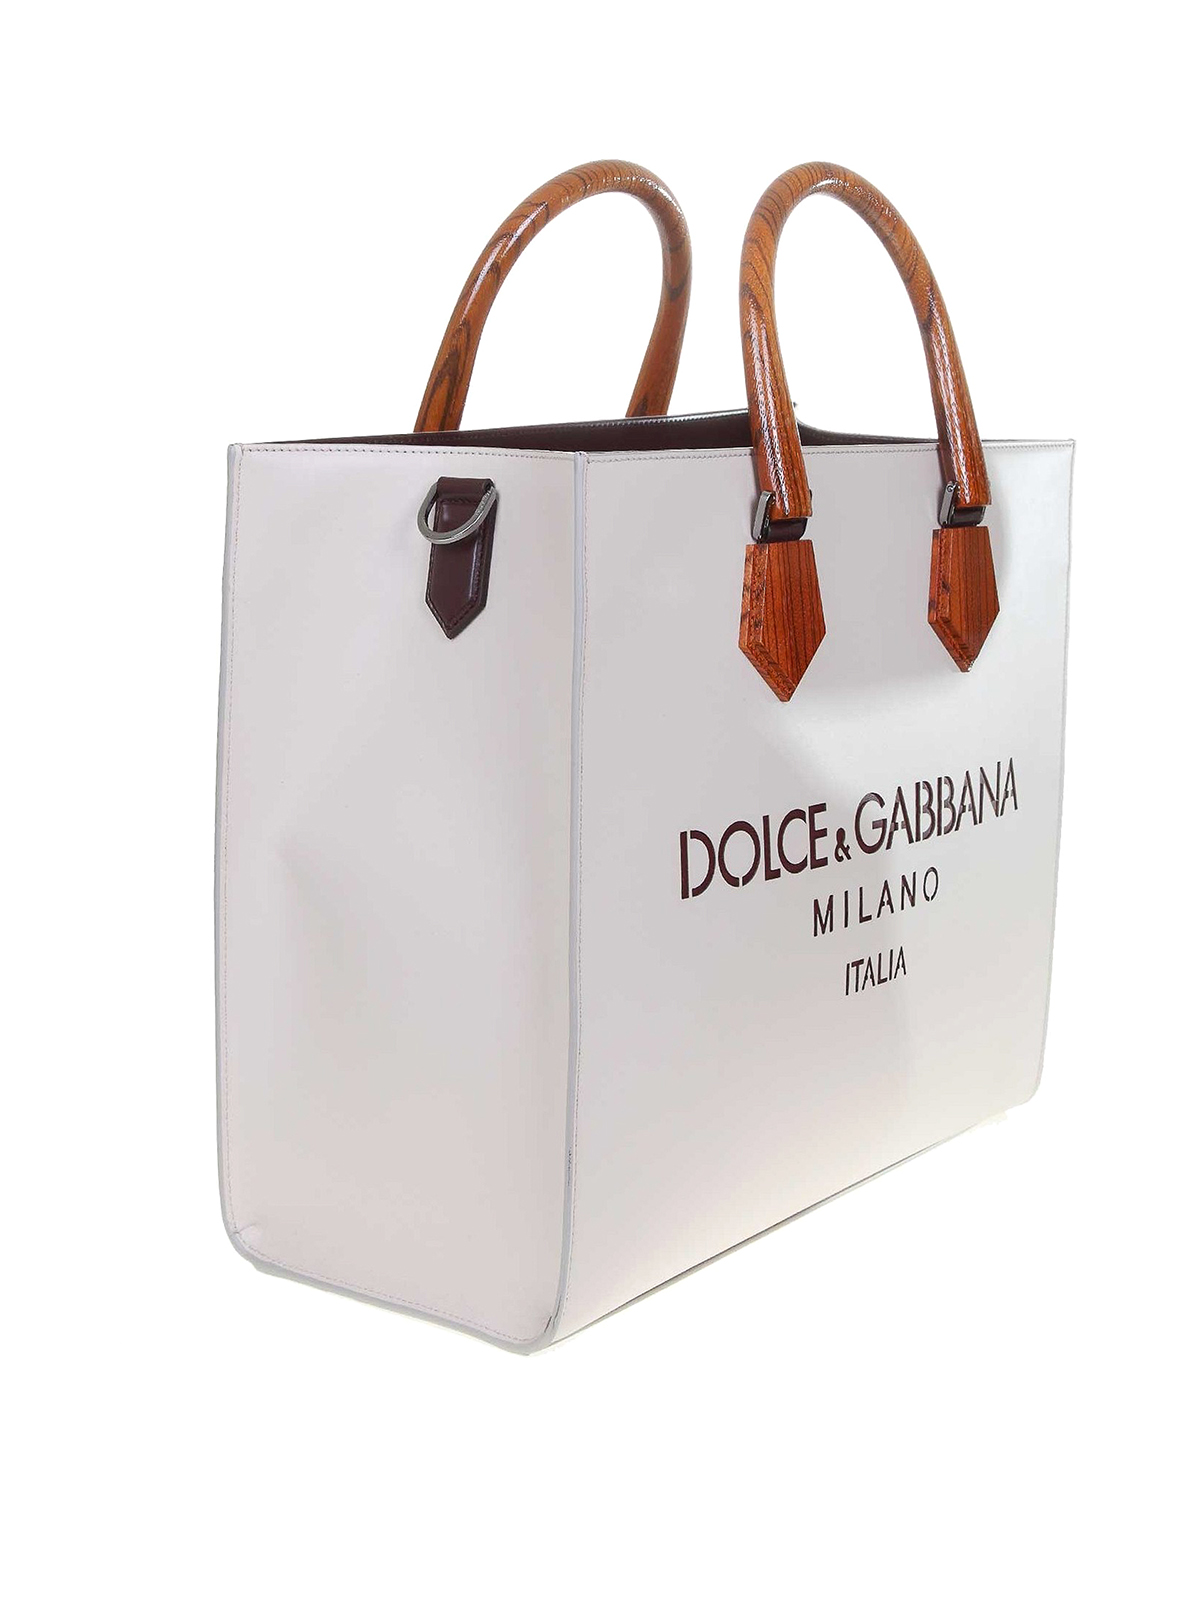 dolce and gabbana tote bag